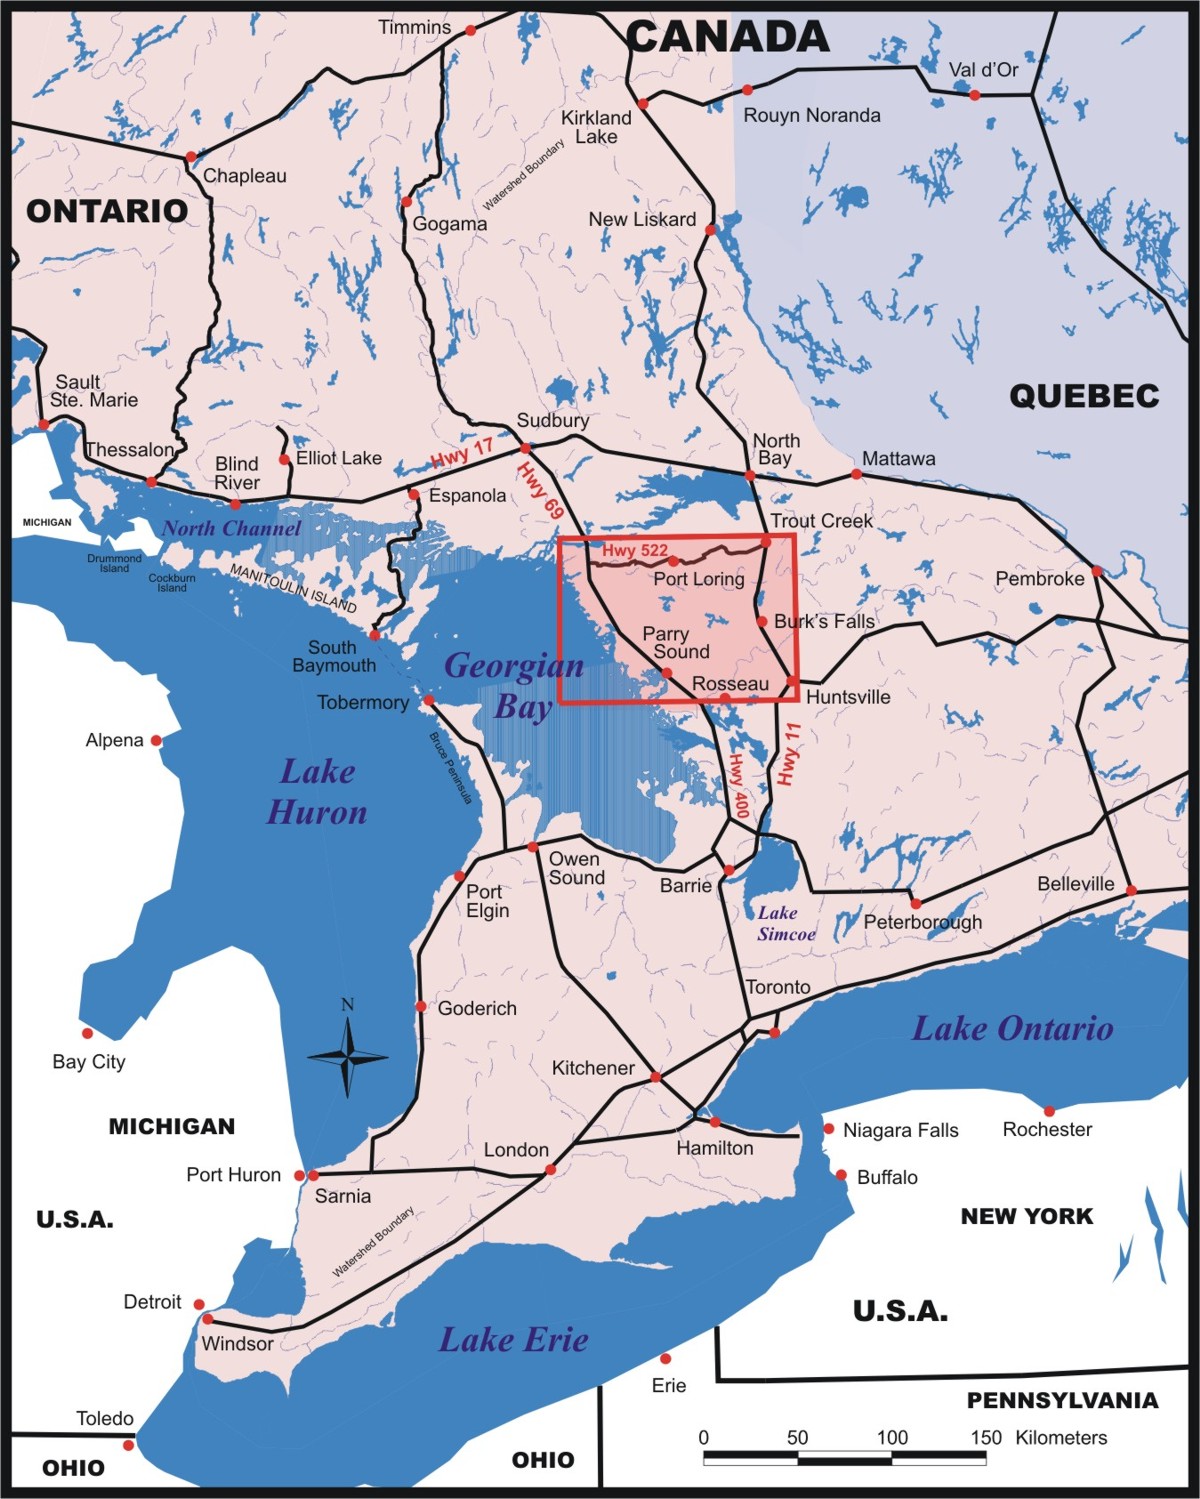 Parry Sound - Huntsville to Port Loring Ontario Location